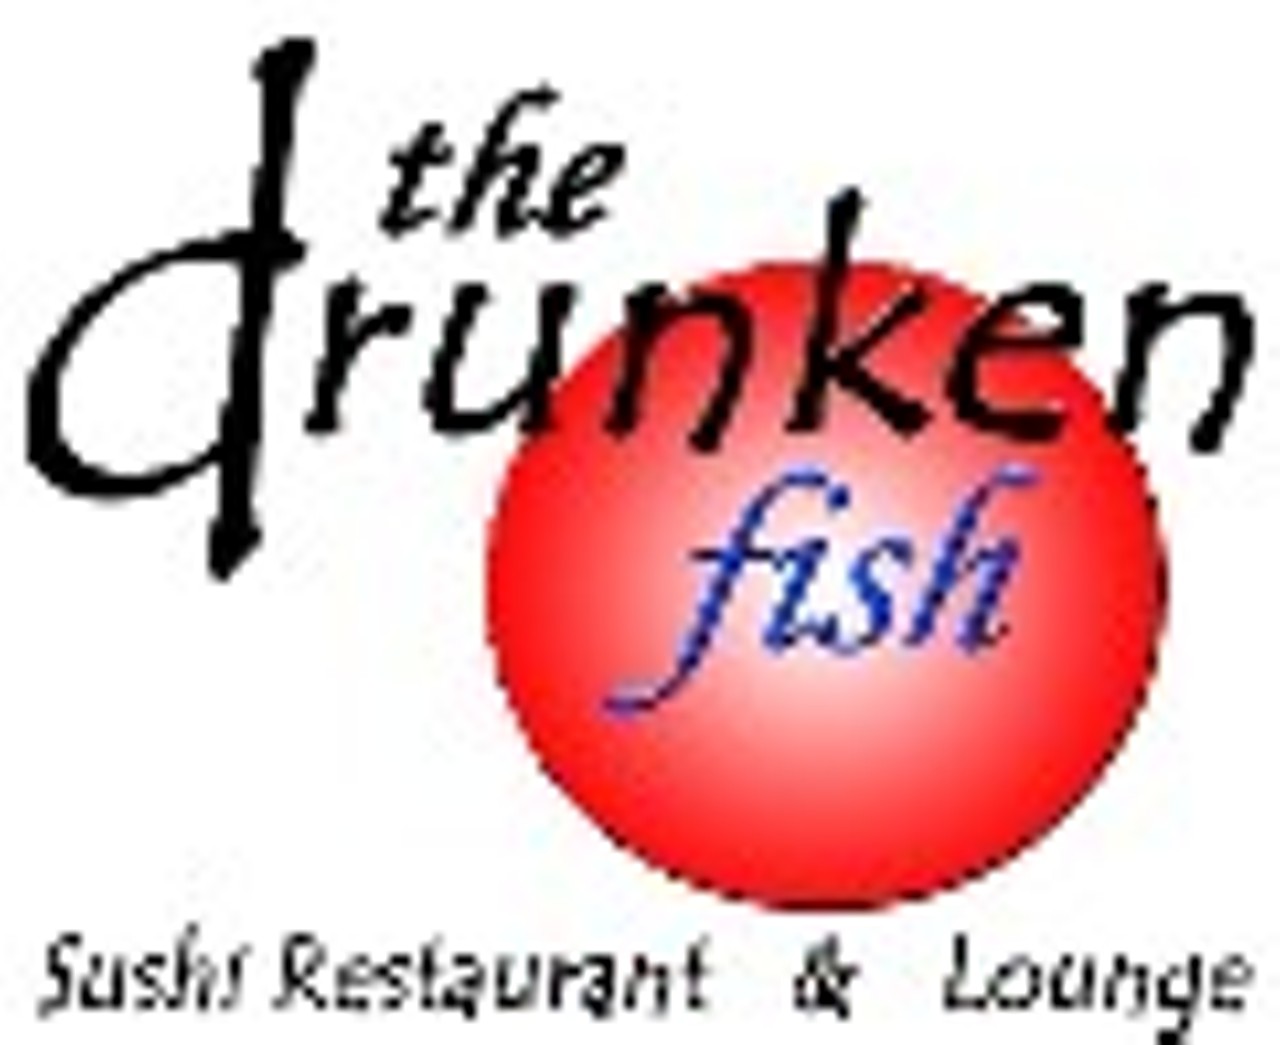 Drunken Fish: Elite Party